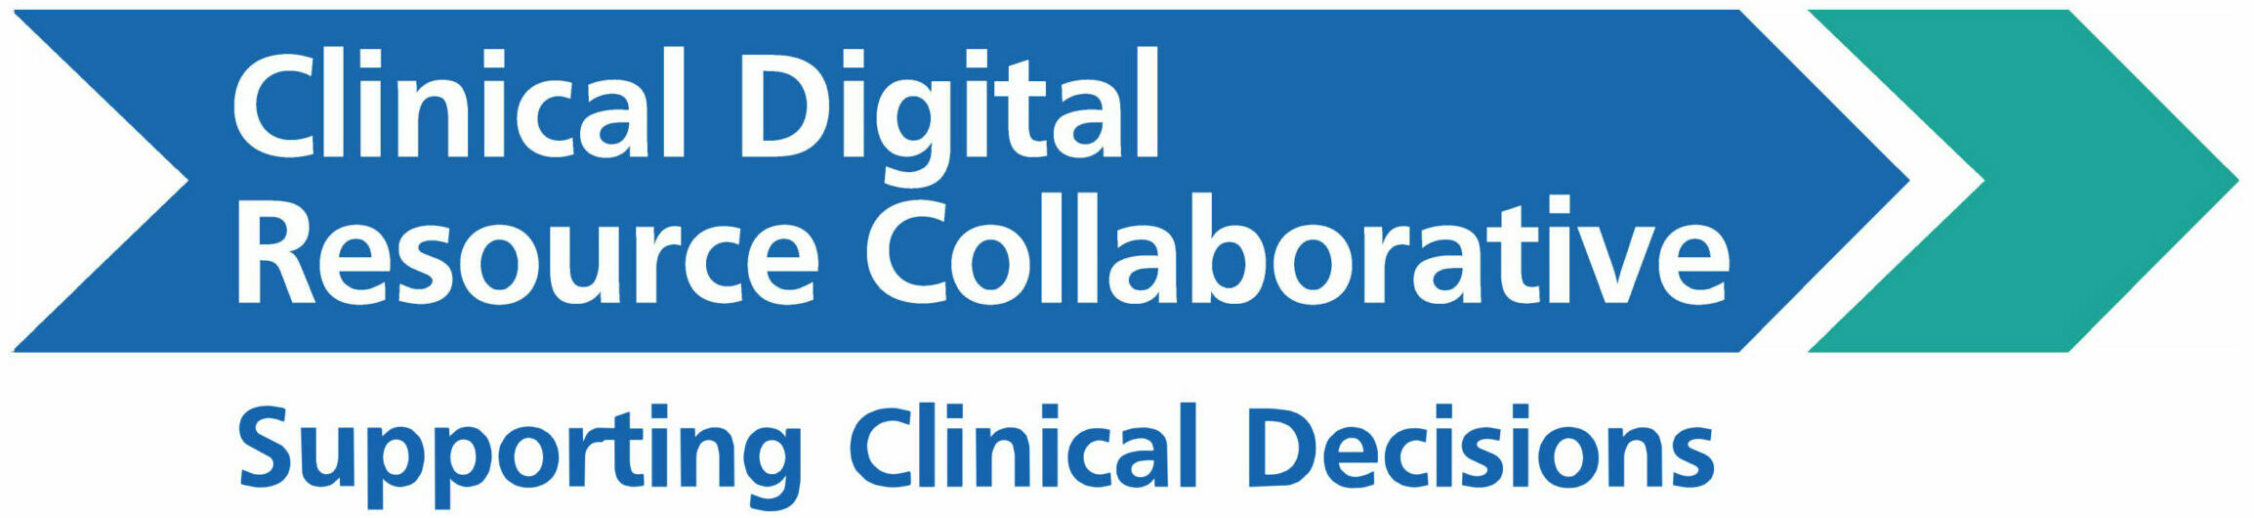 Clinical Digital Resource Collaborative